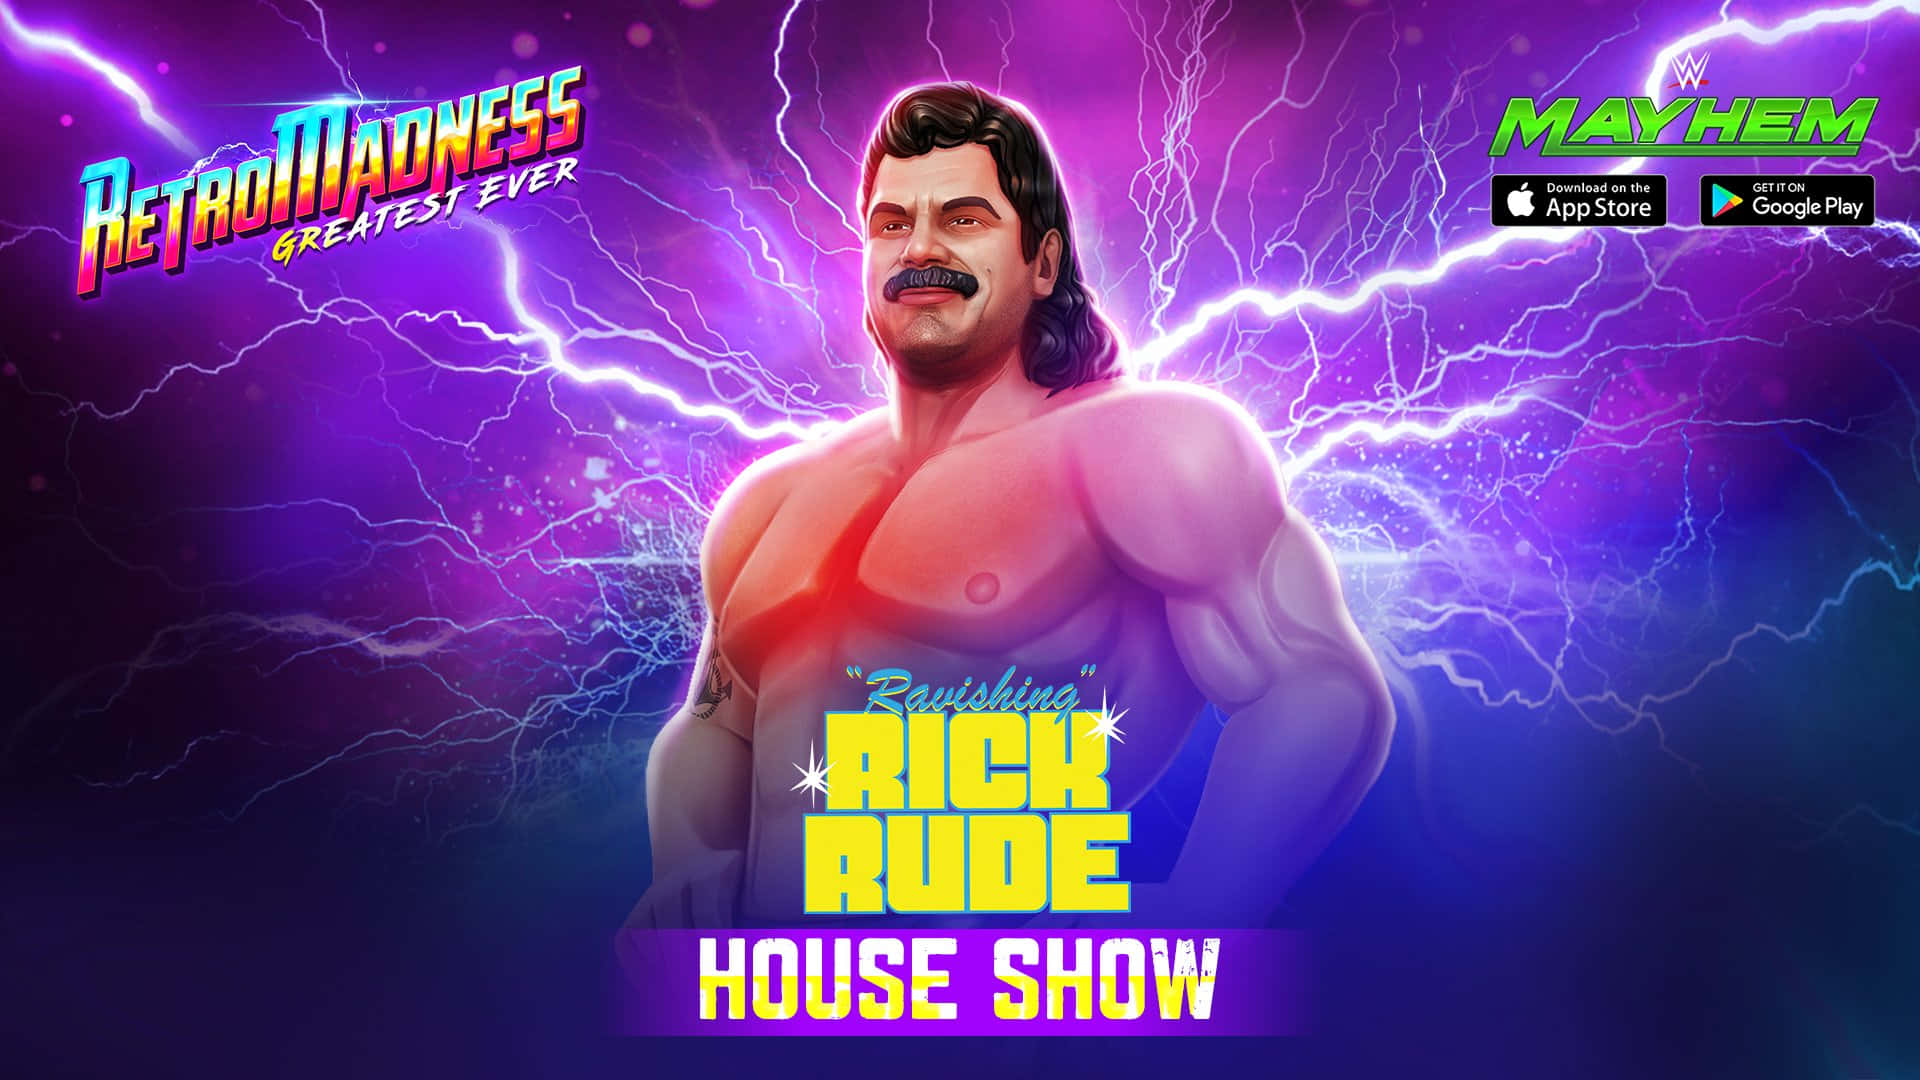 Rick Rude WWE Mayhem Mobile Game Wallpaper